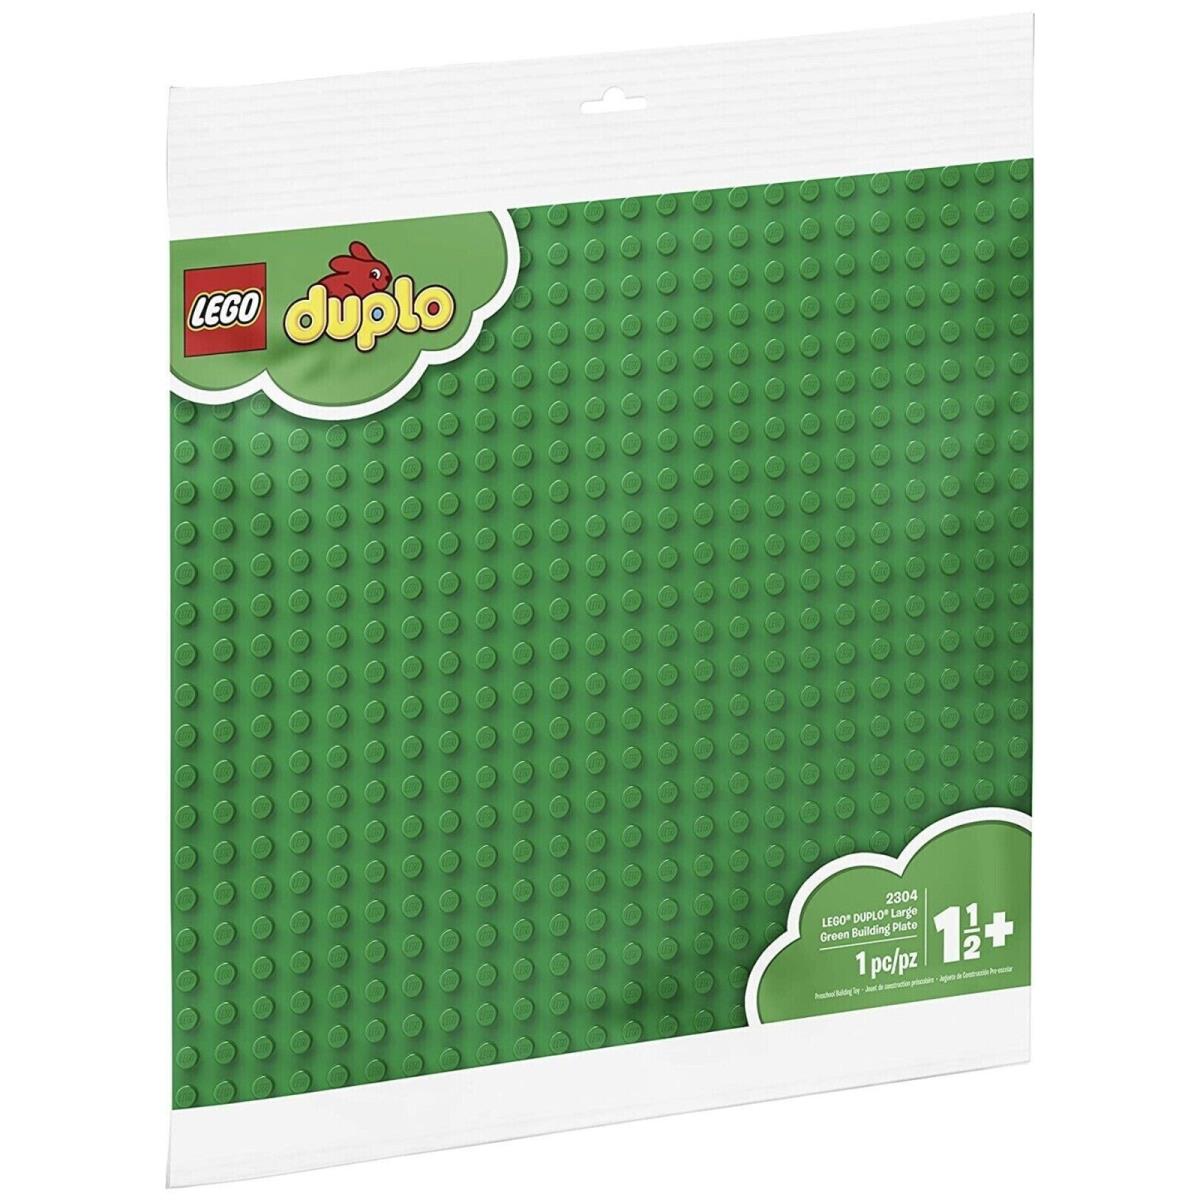 Set OF 4 - Lego Duplo 2304 Baseplate Large Green Building Plate